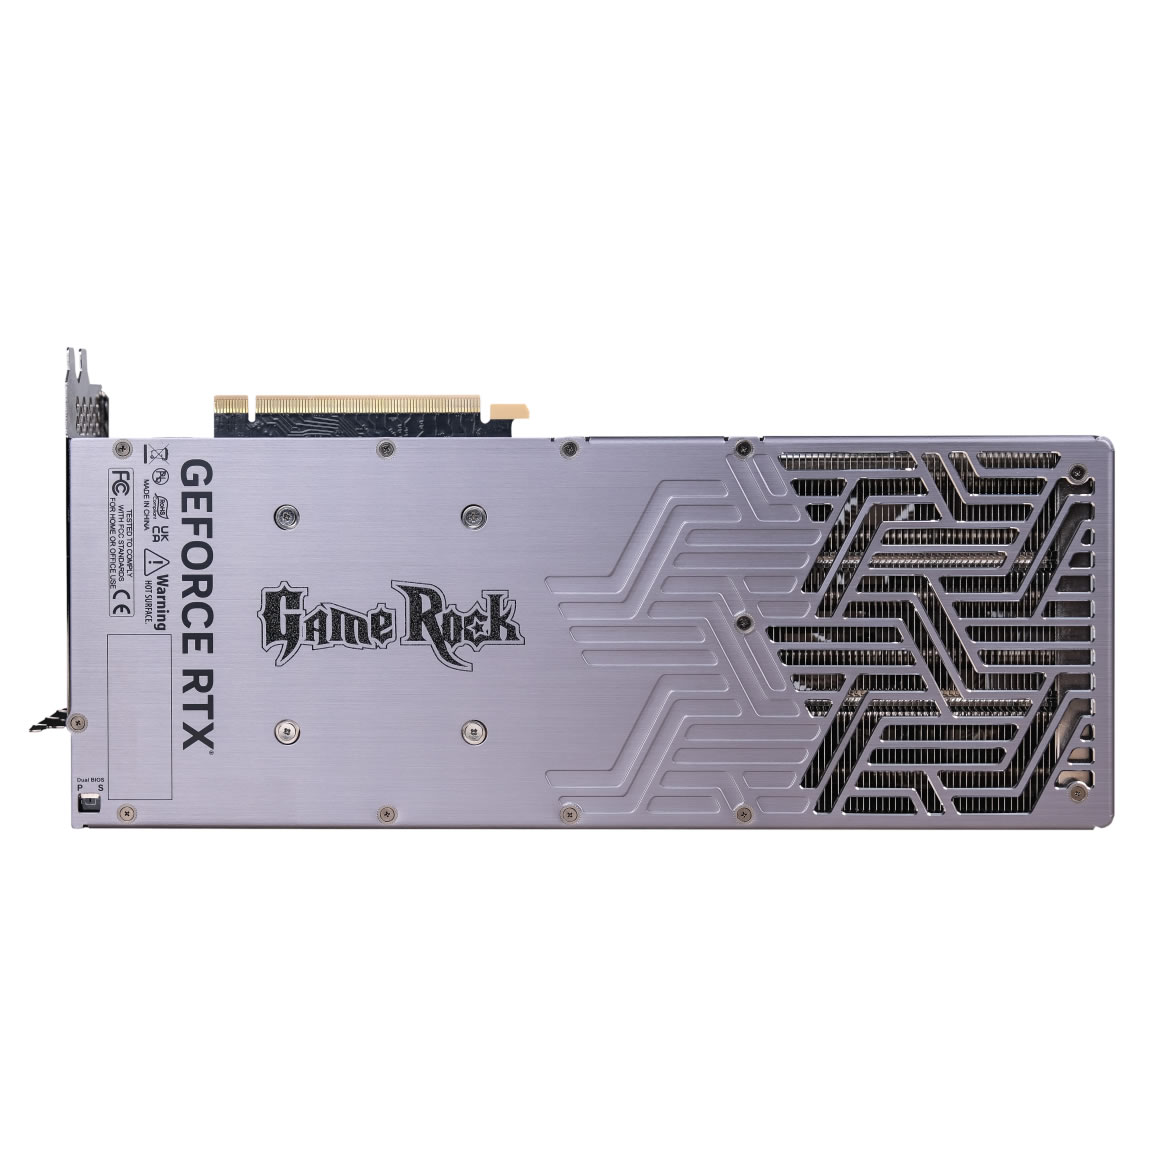 Palit - Palit GeForce RTX 4080 GameRock OmniBlack 16GB GDDR6X PCI-Express Graphics Card